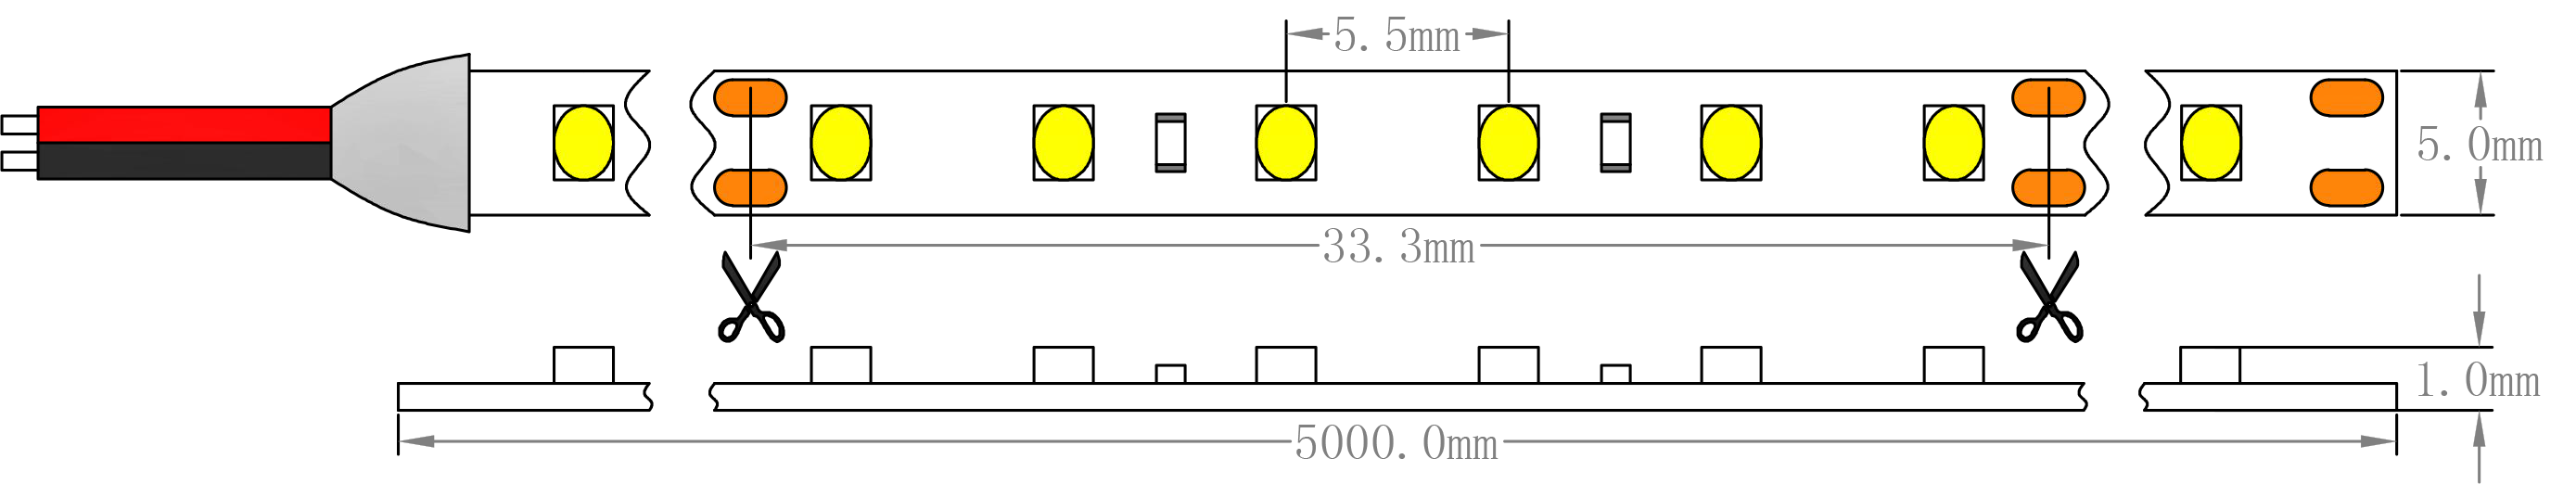 SMD2835 5mm 14.4W LED Strip Light Dimension